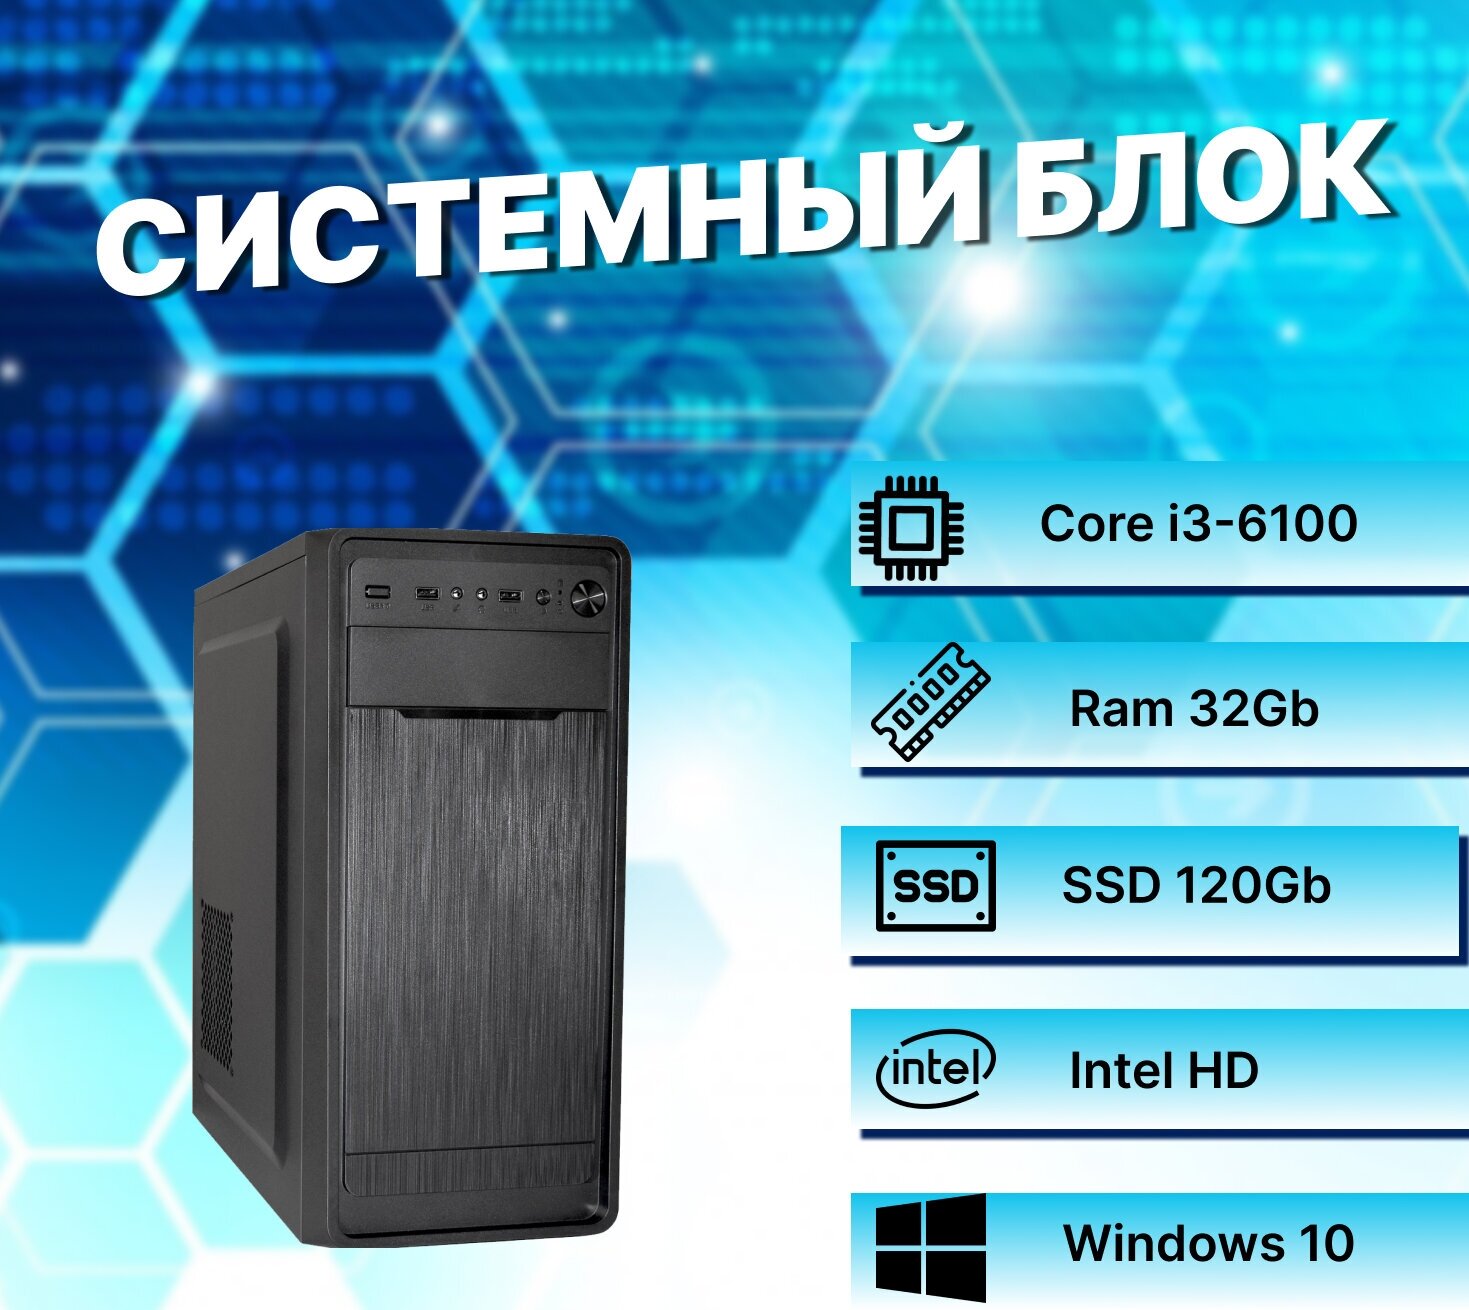 Системный блок Intel Core I3-6100 (3.7ГГц)/ RAM 32Gb/ SSD 120Gb/ Intel HD/ Windows 10 Pro